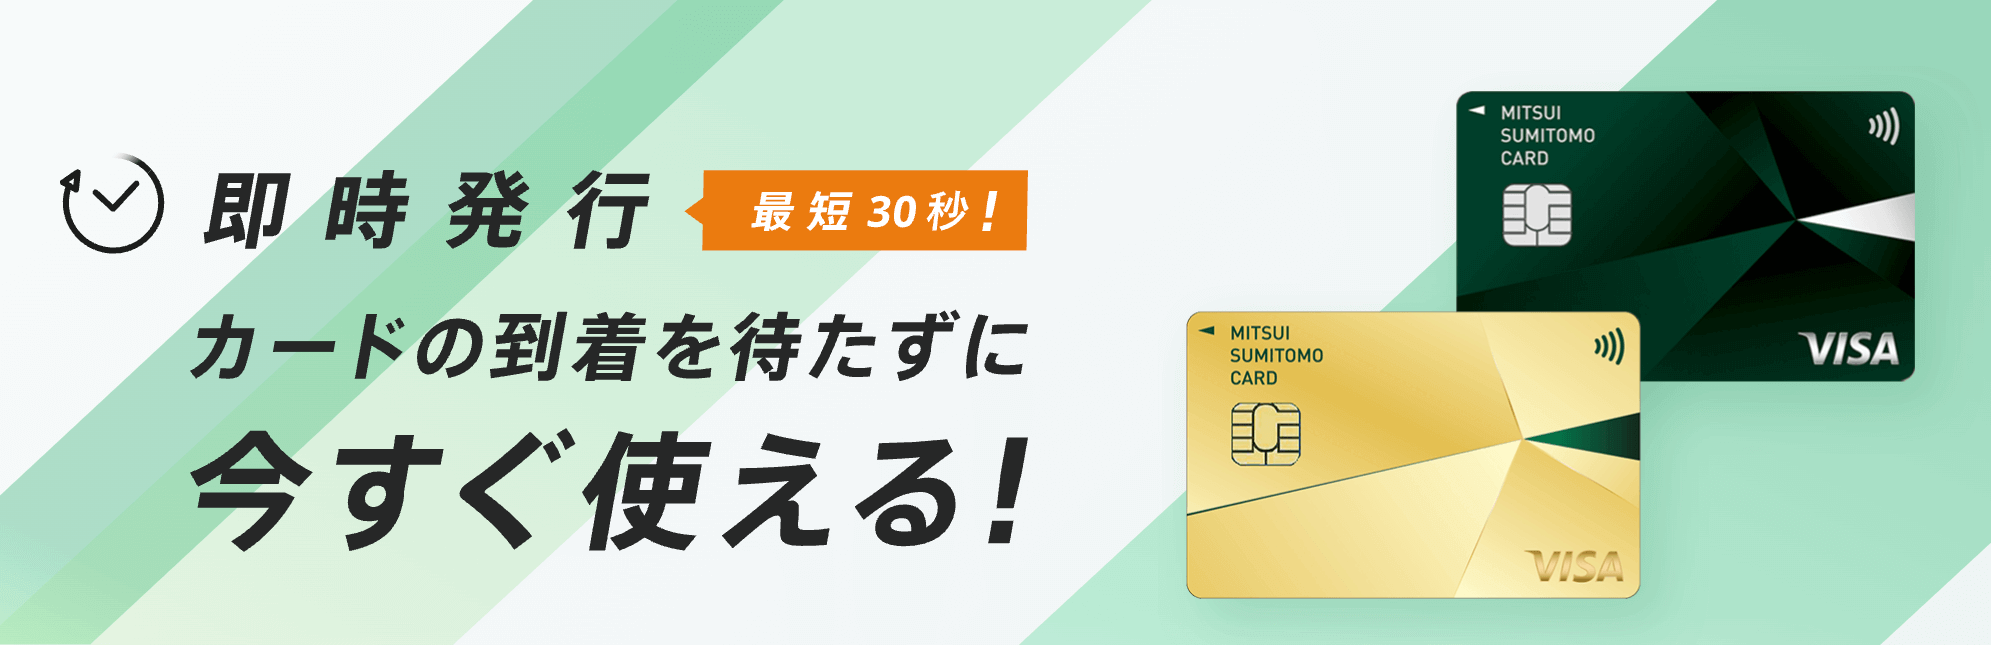 三井住友カード即時発行